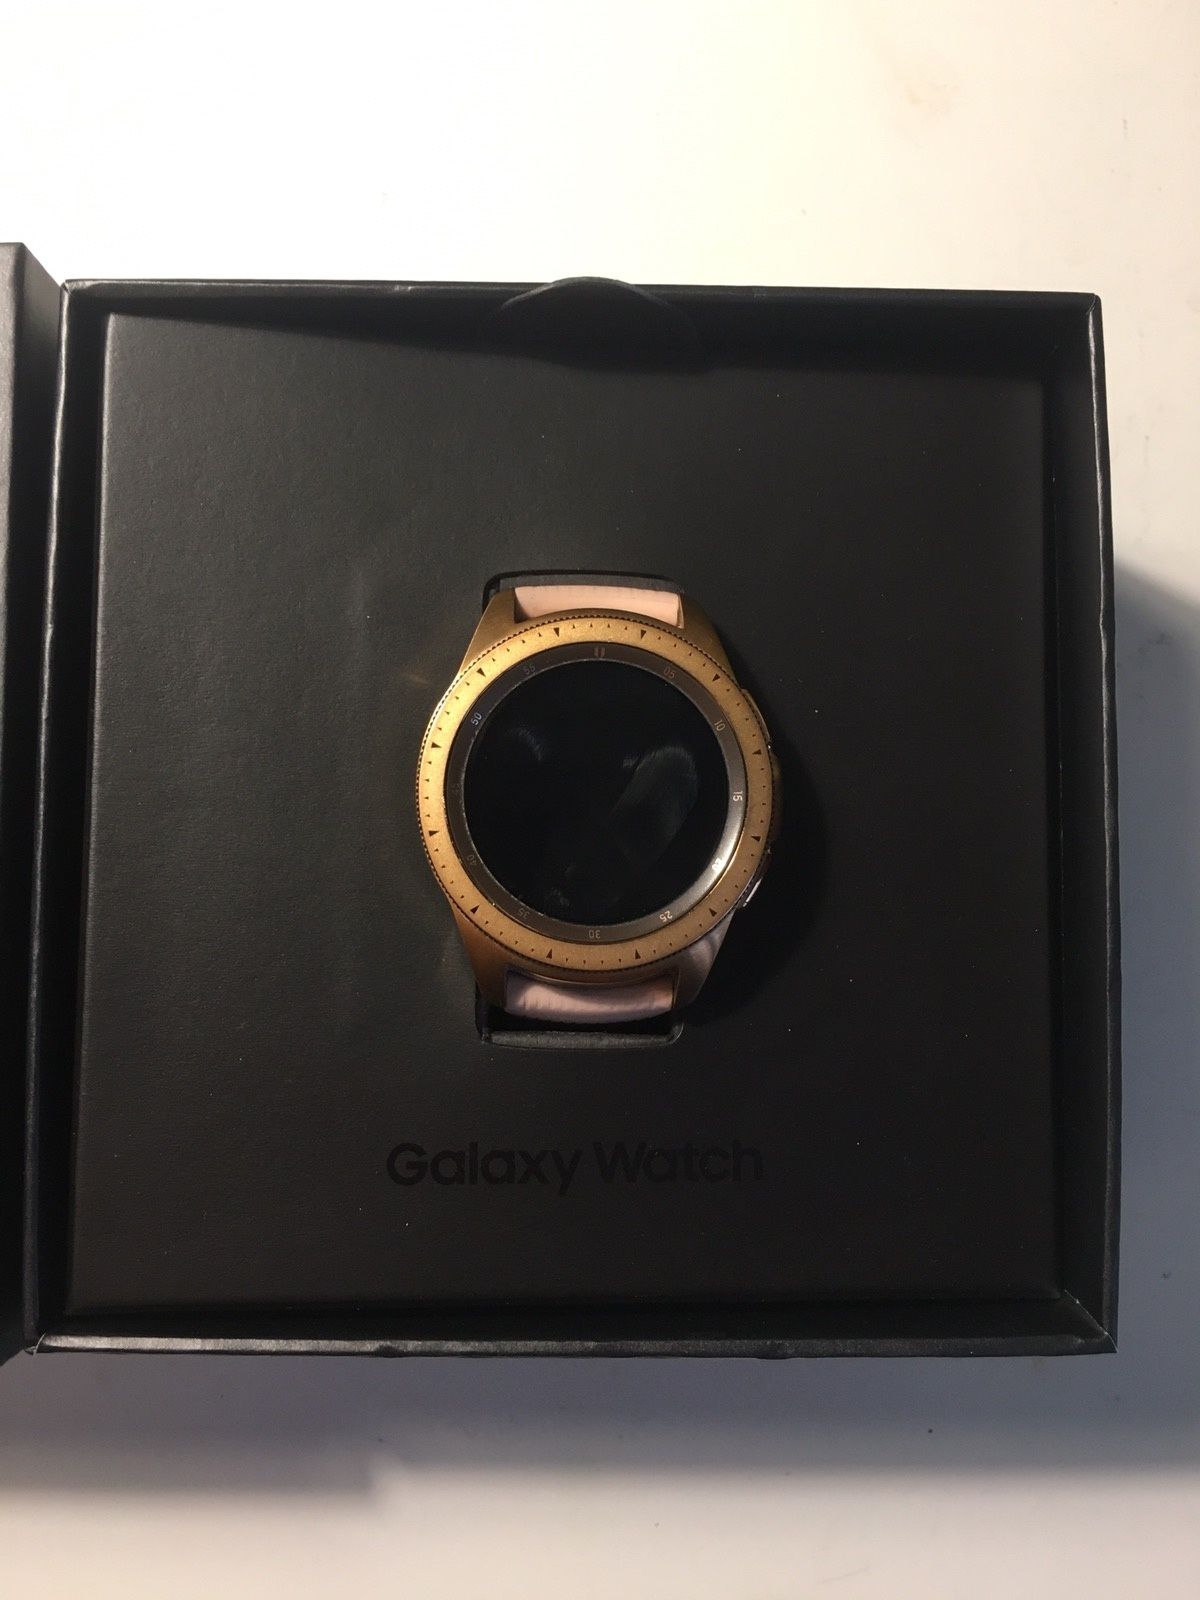 Samsung Galaxy Watch R810 42mm gold
SM